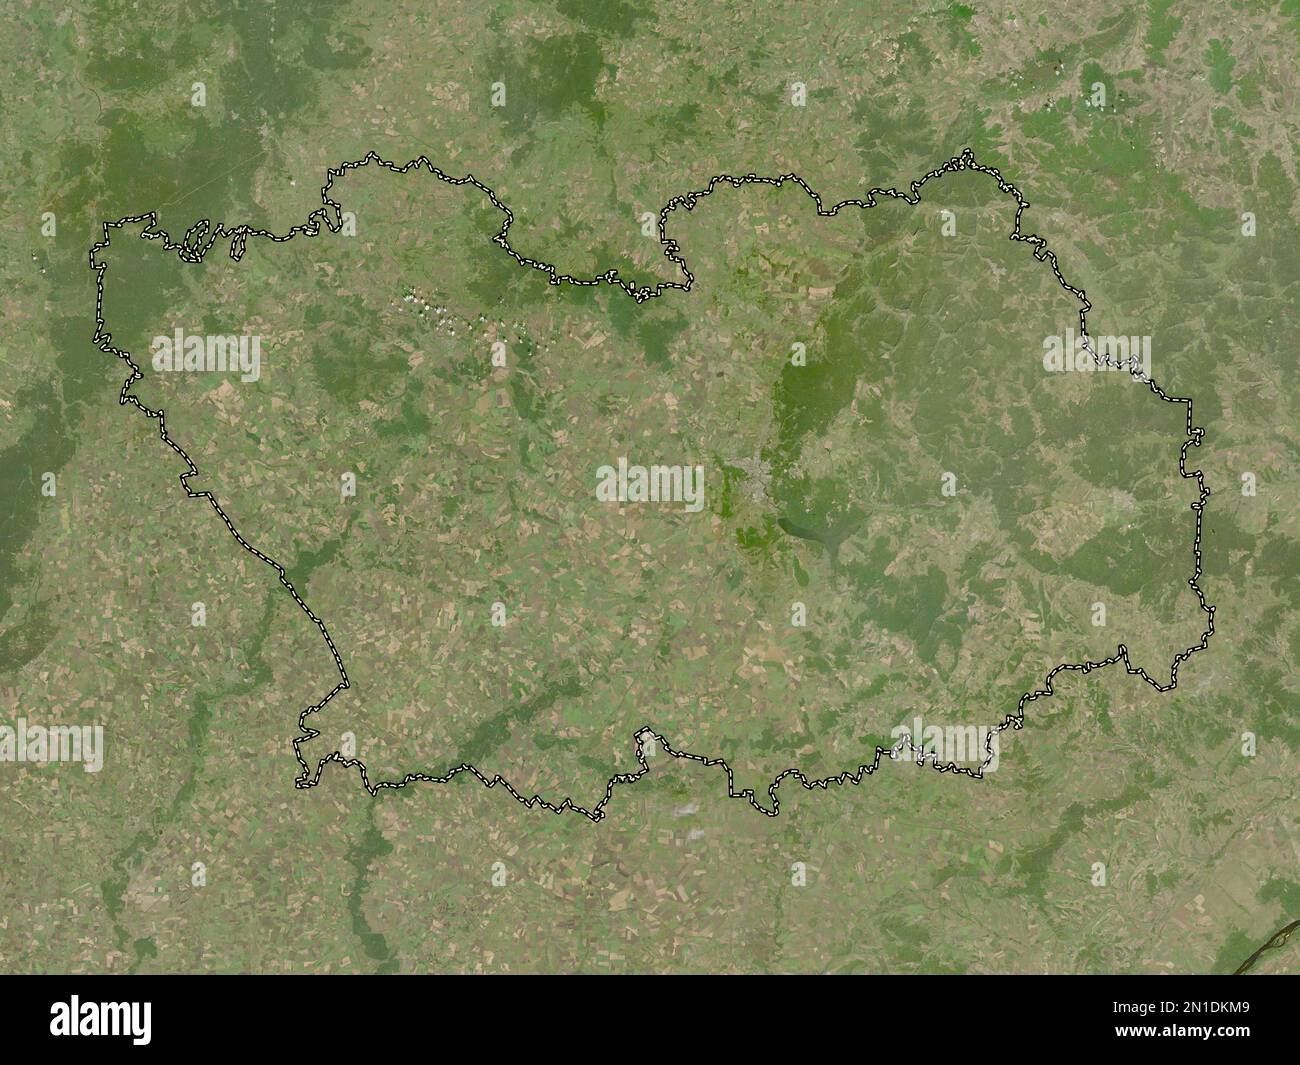 Penza, region of Russia. Low resolution satellite map Stock Photo